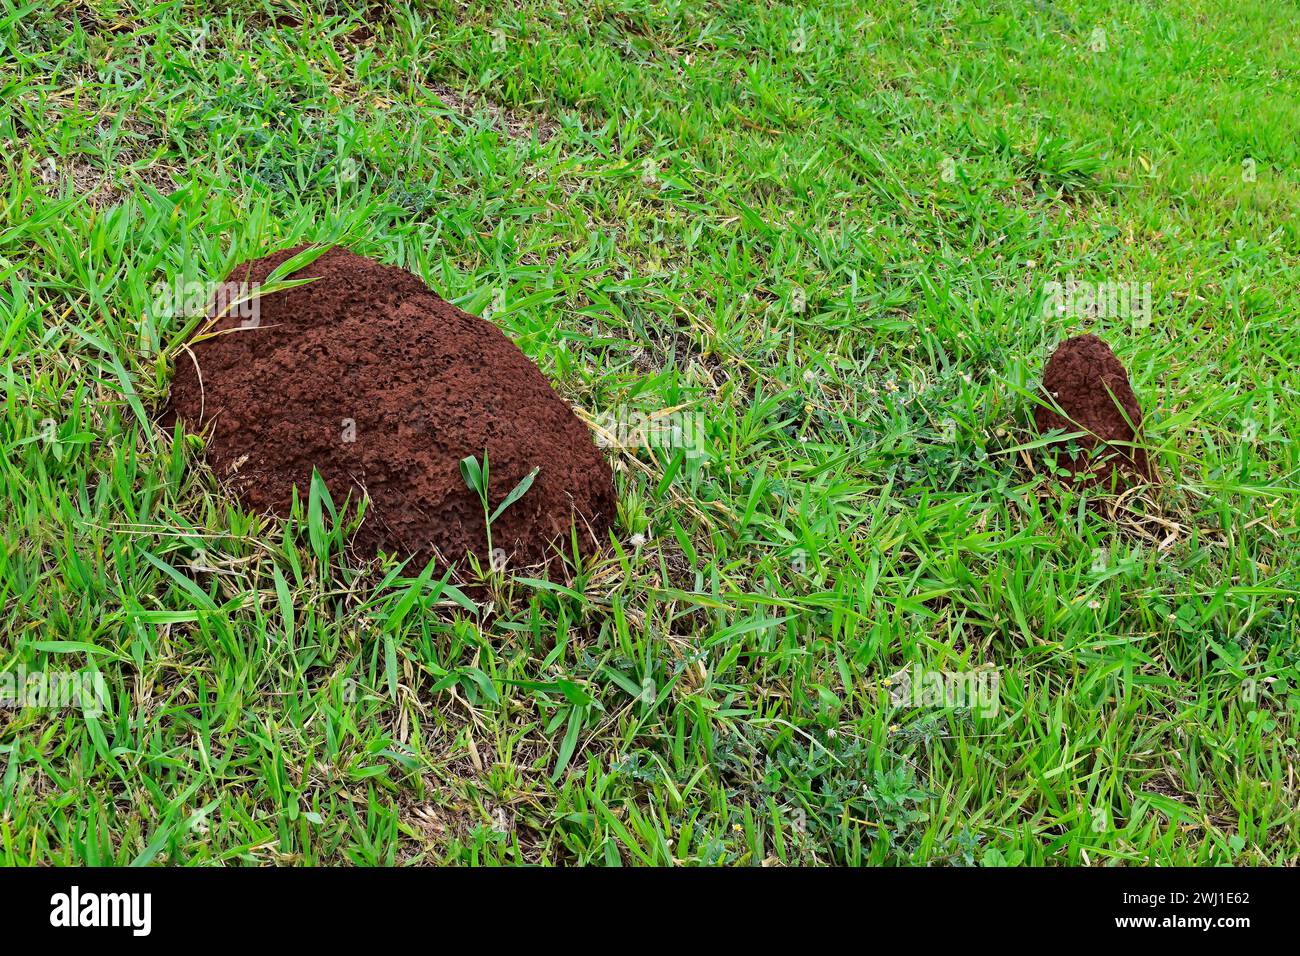 Termite mounds on grass, Ribeirao Preto, Sao Paulo, Brazil Stock Photo